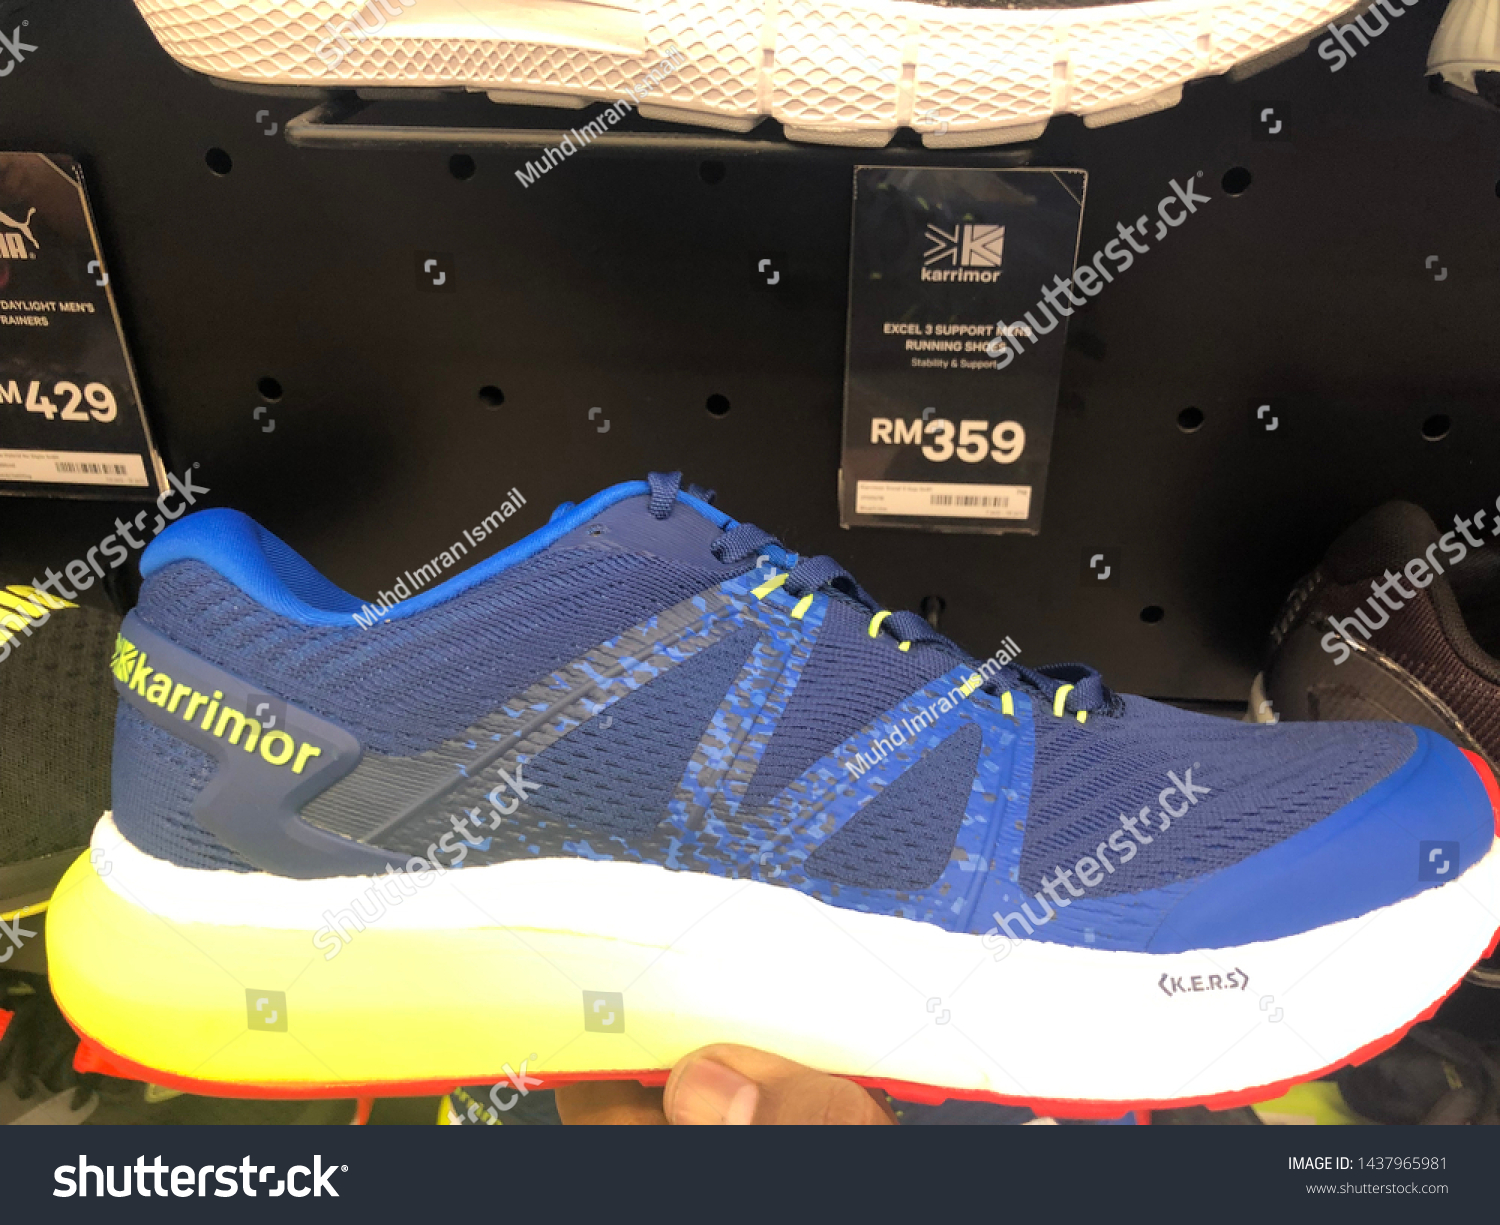 karrimor support running shoes